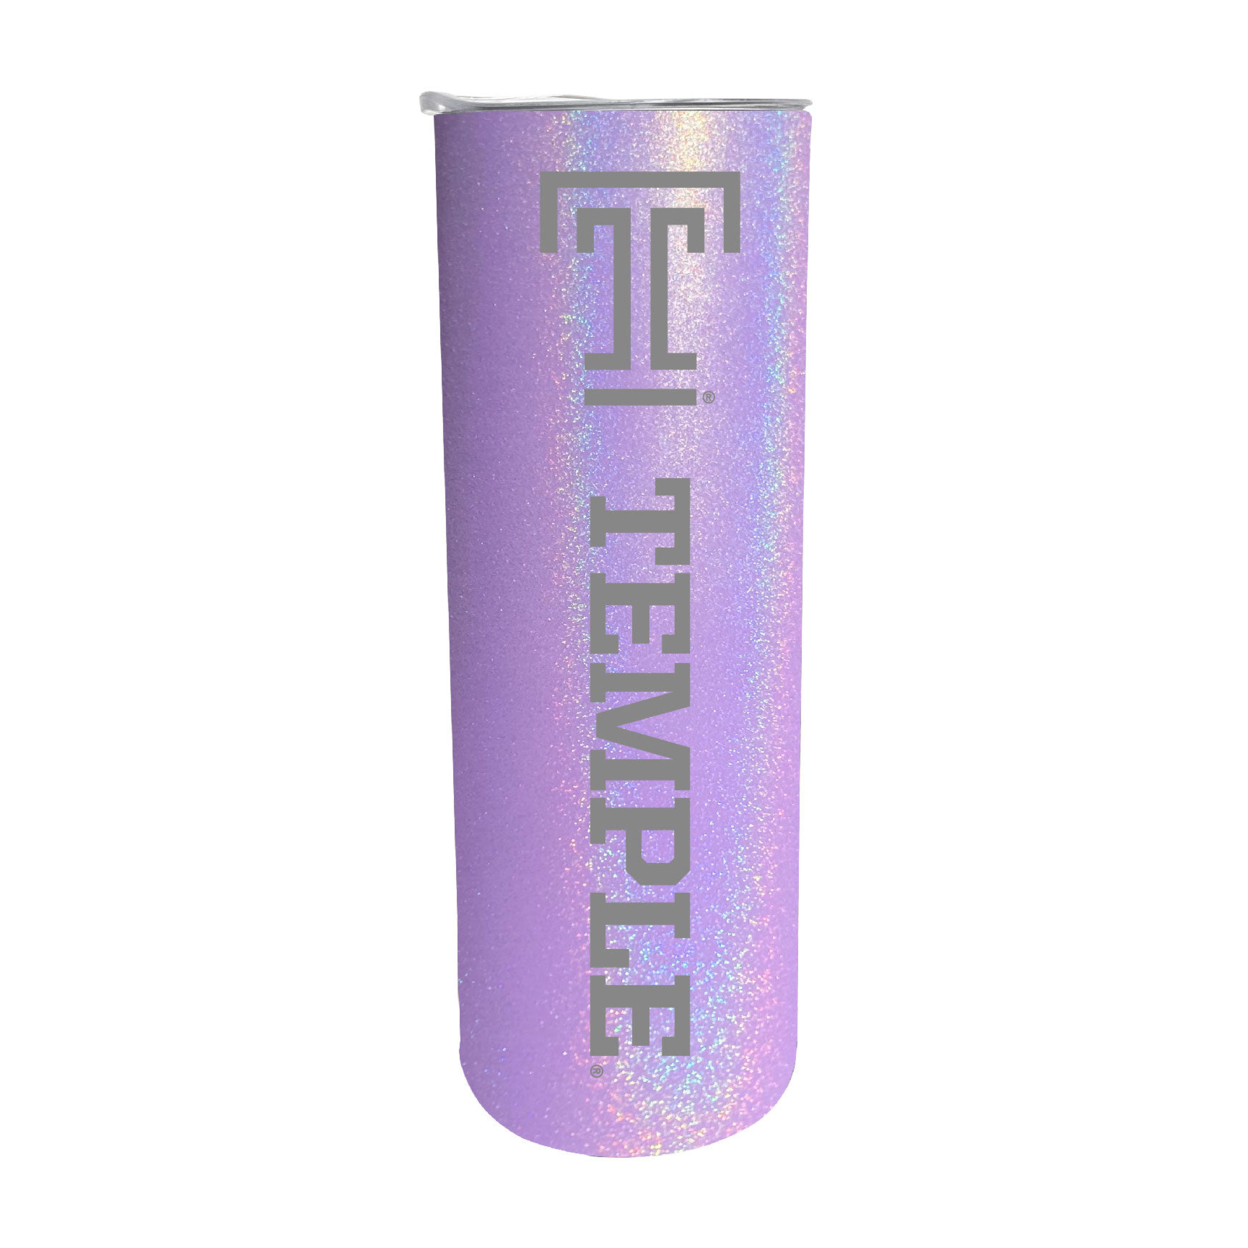 Temple University 20oz Insulated Stainless Steel Skinny Tumbler - Rainbow Glitter Purple